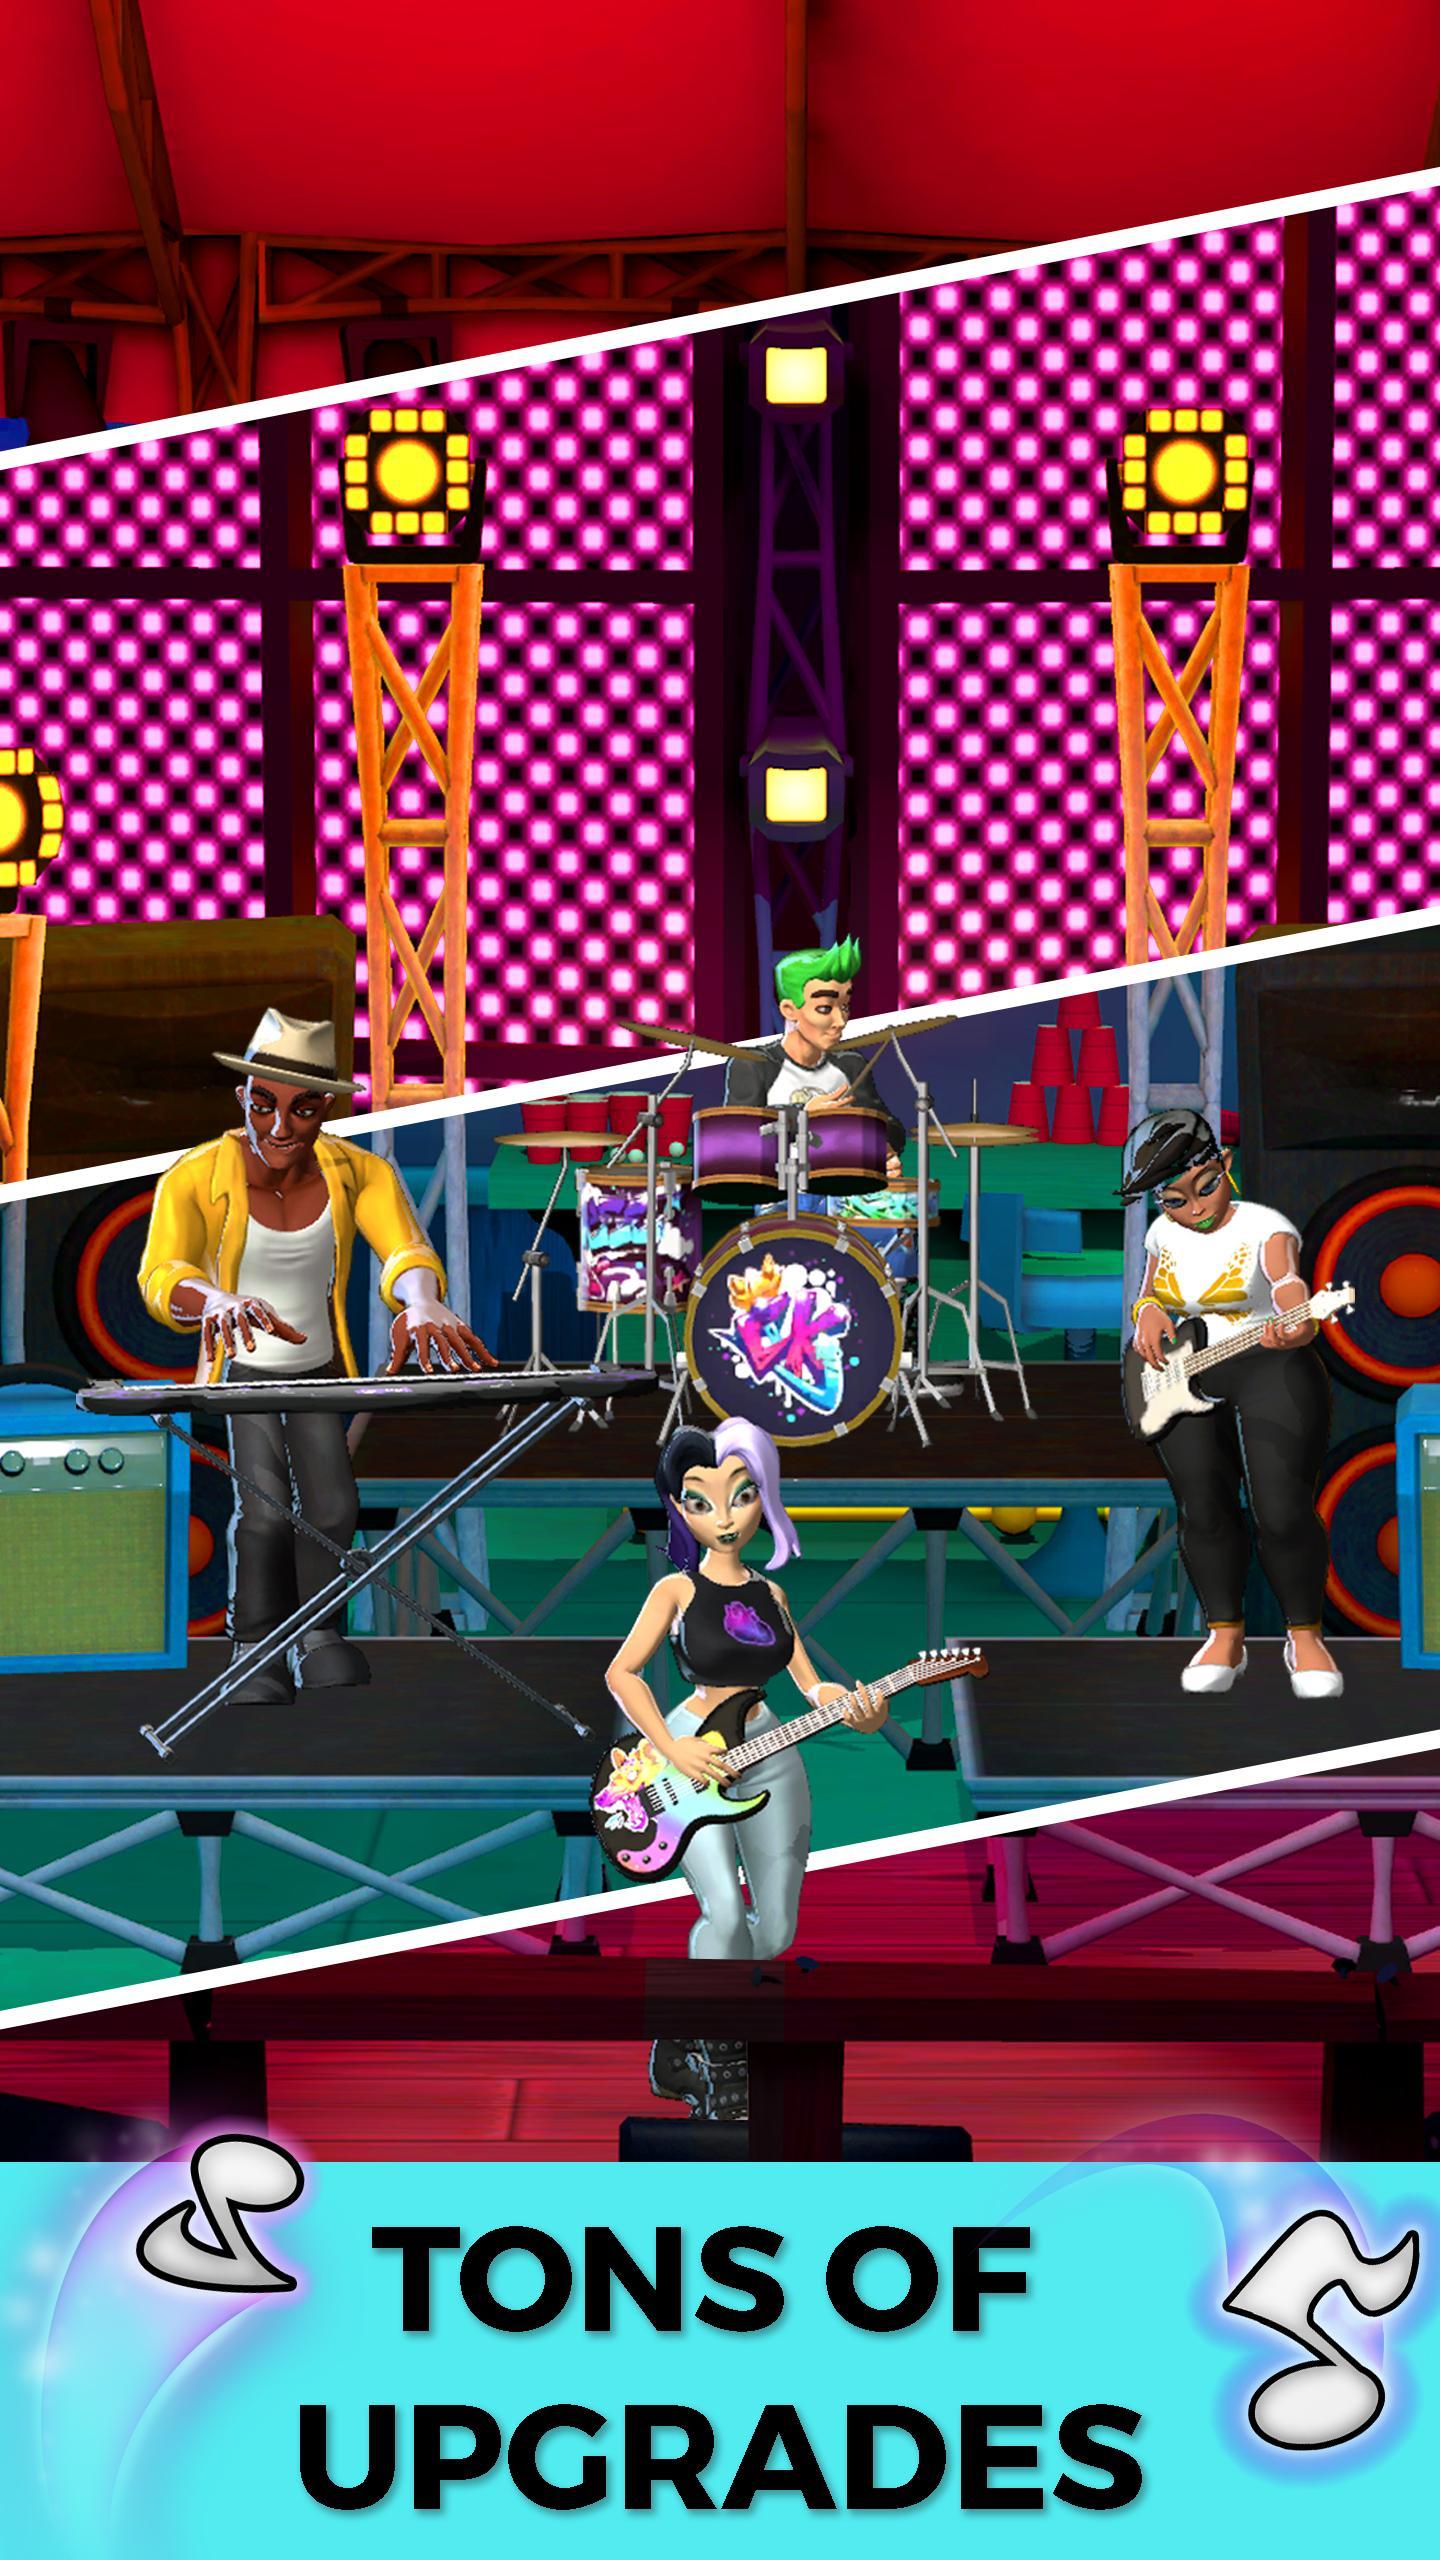 Concert Kings Idle Music Tycoon screenshot game